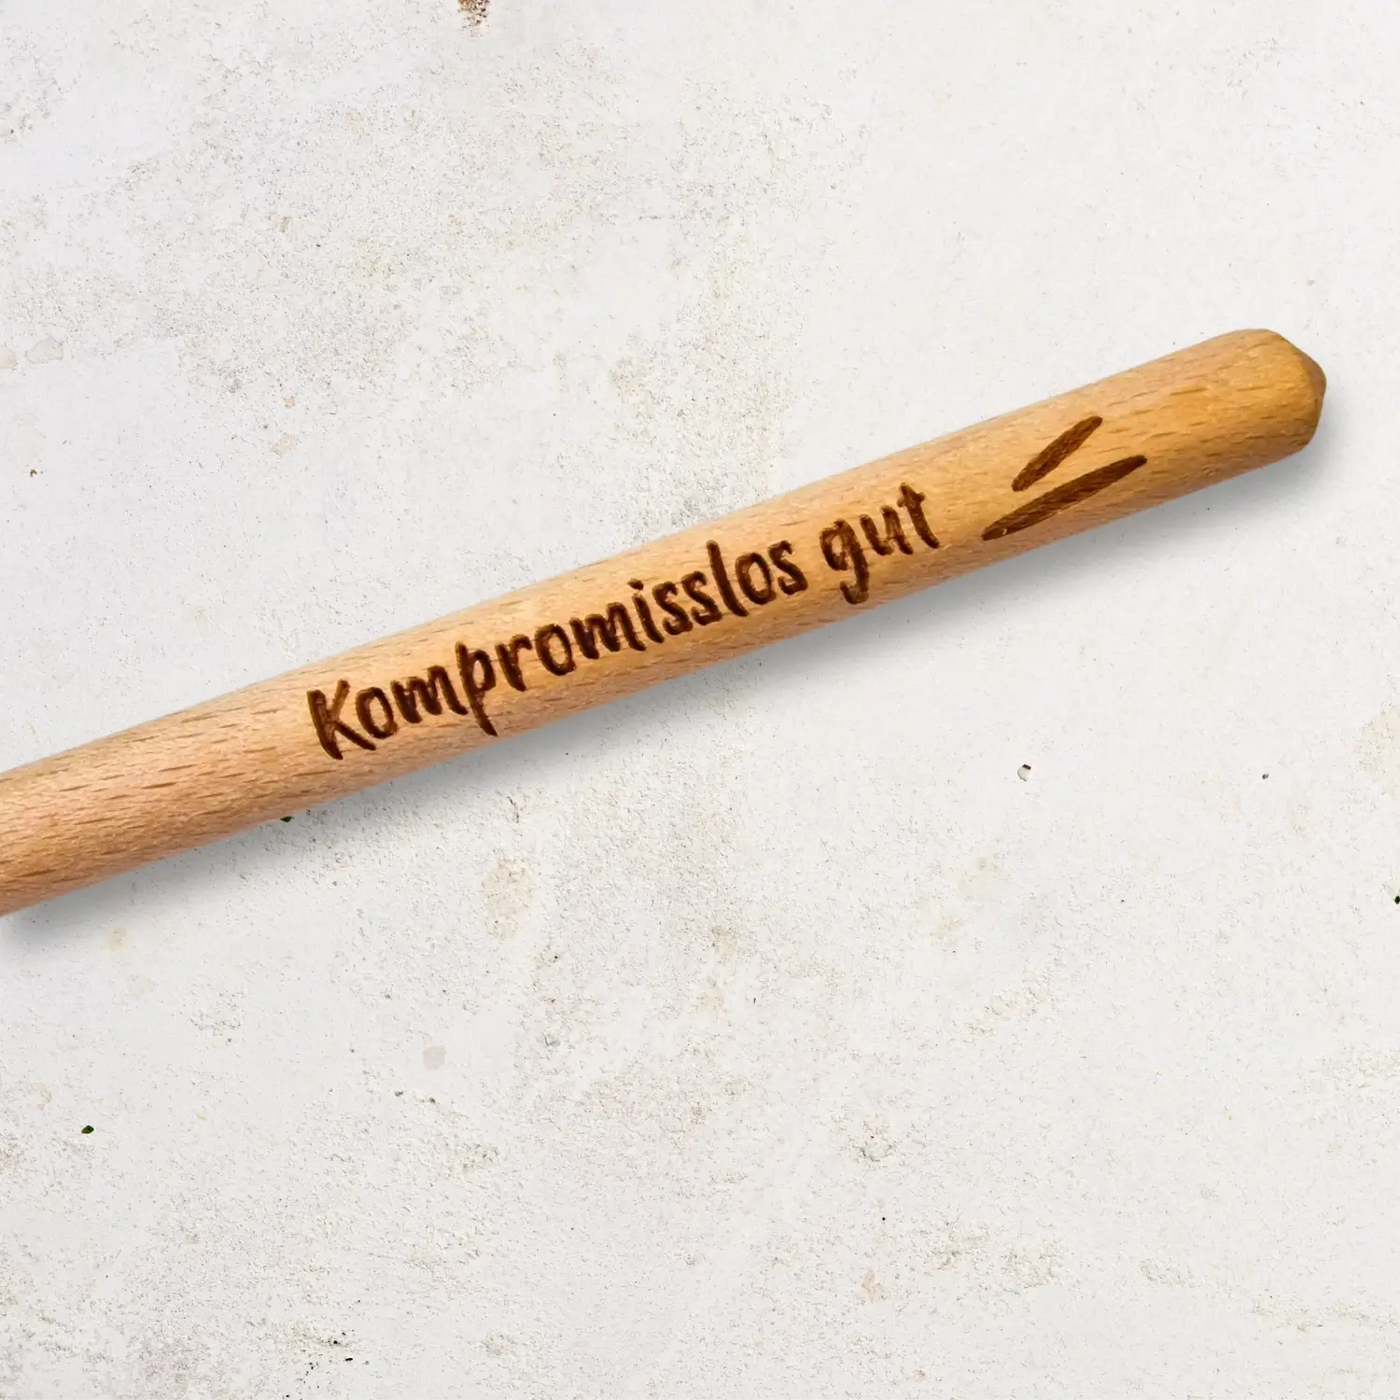 Lotao Kochlöffel aus Holz mit Gravur Kompromisslos gut